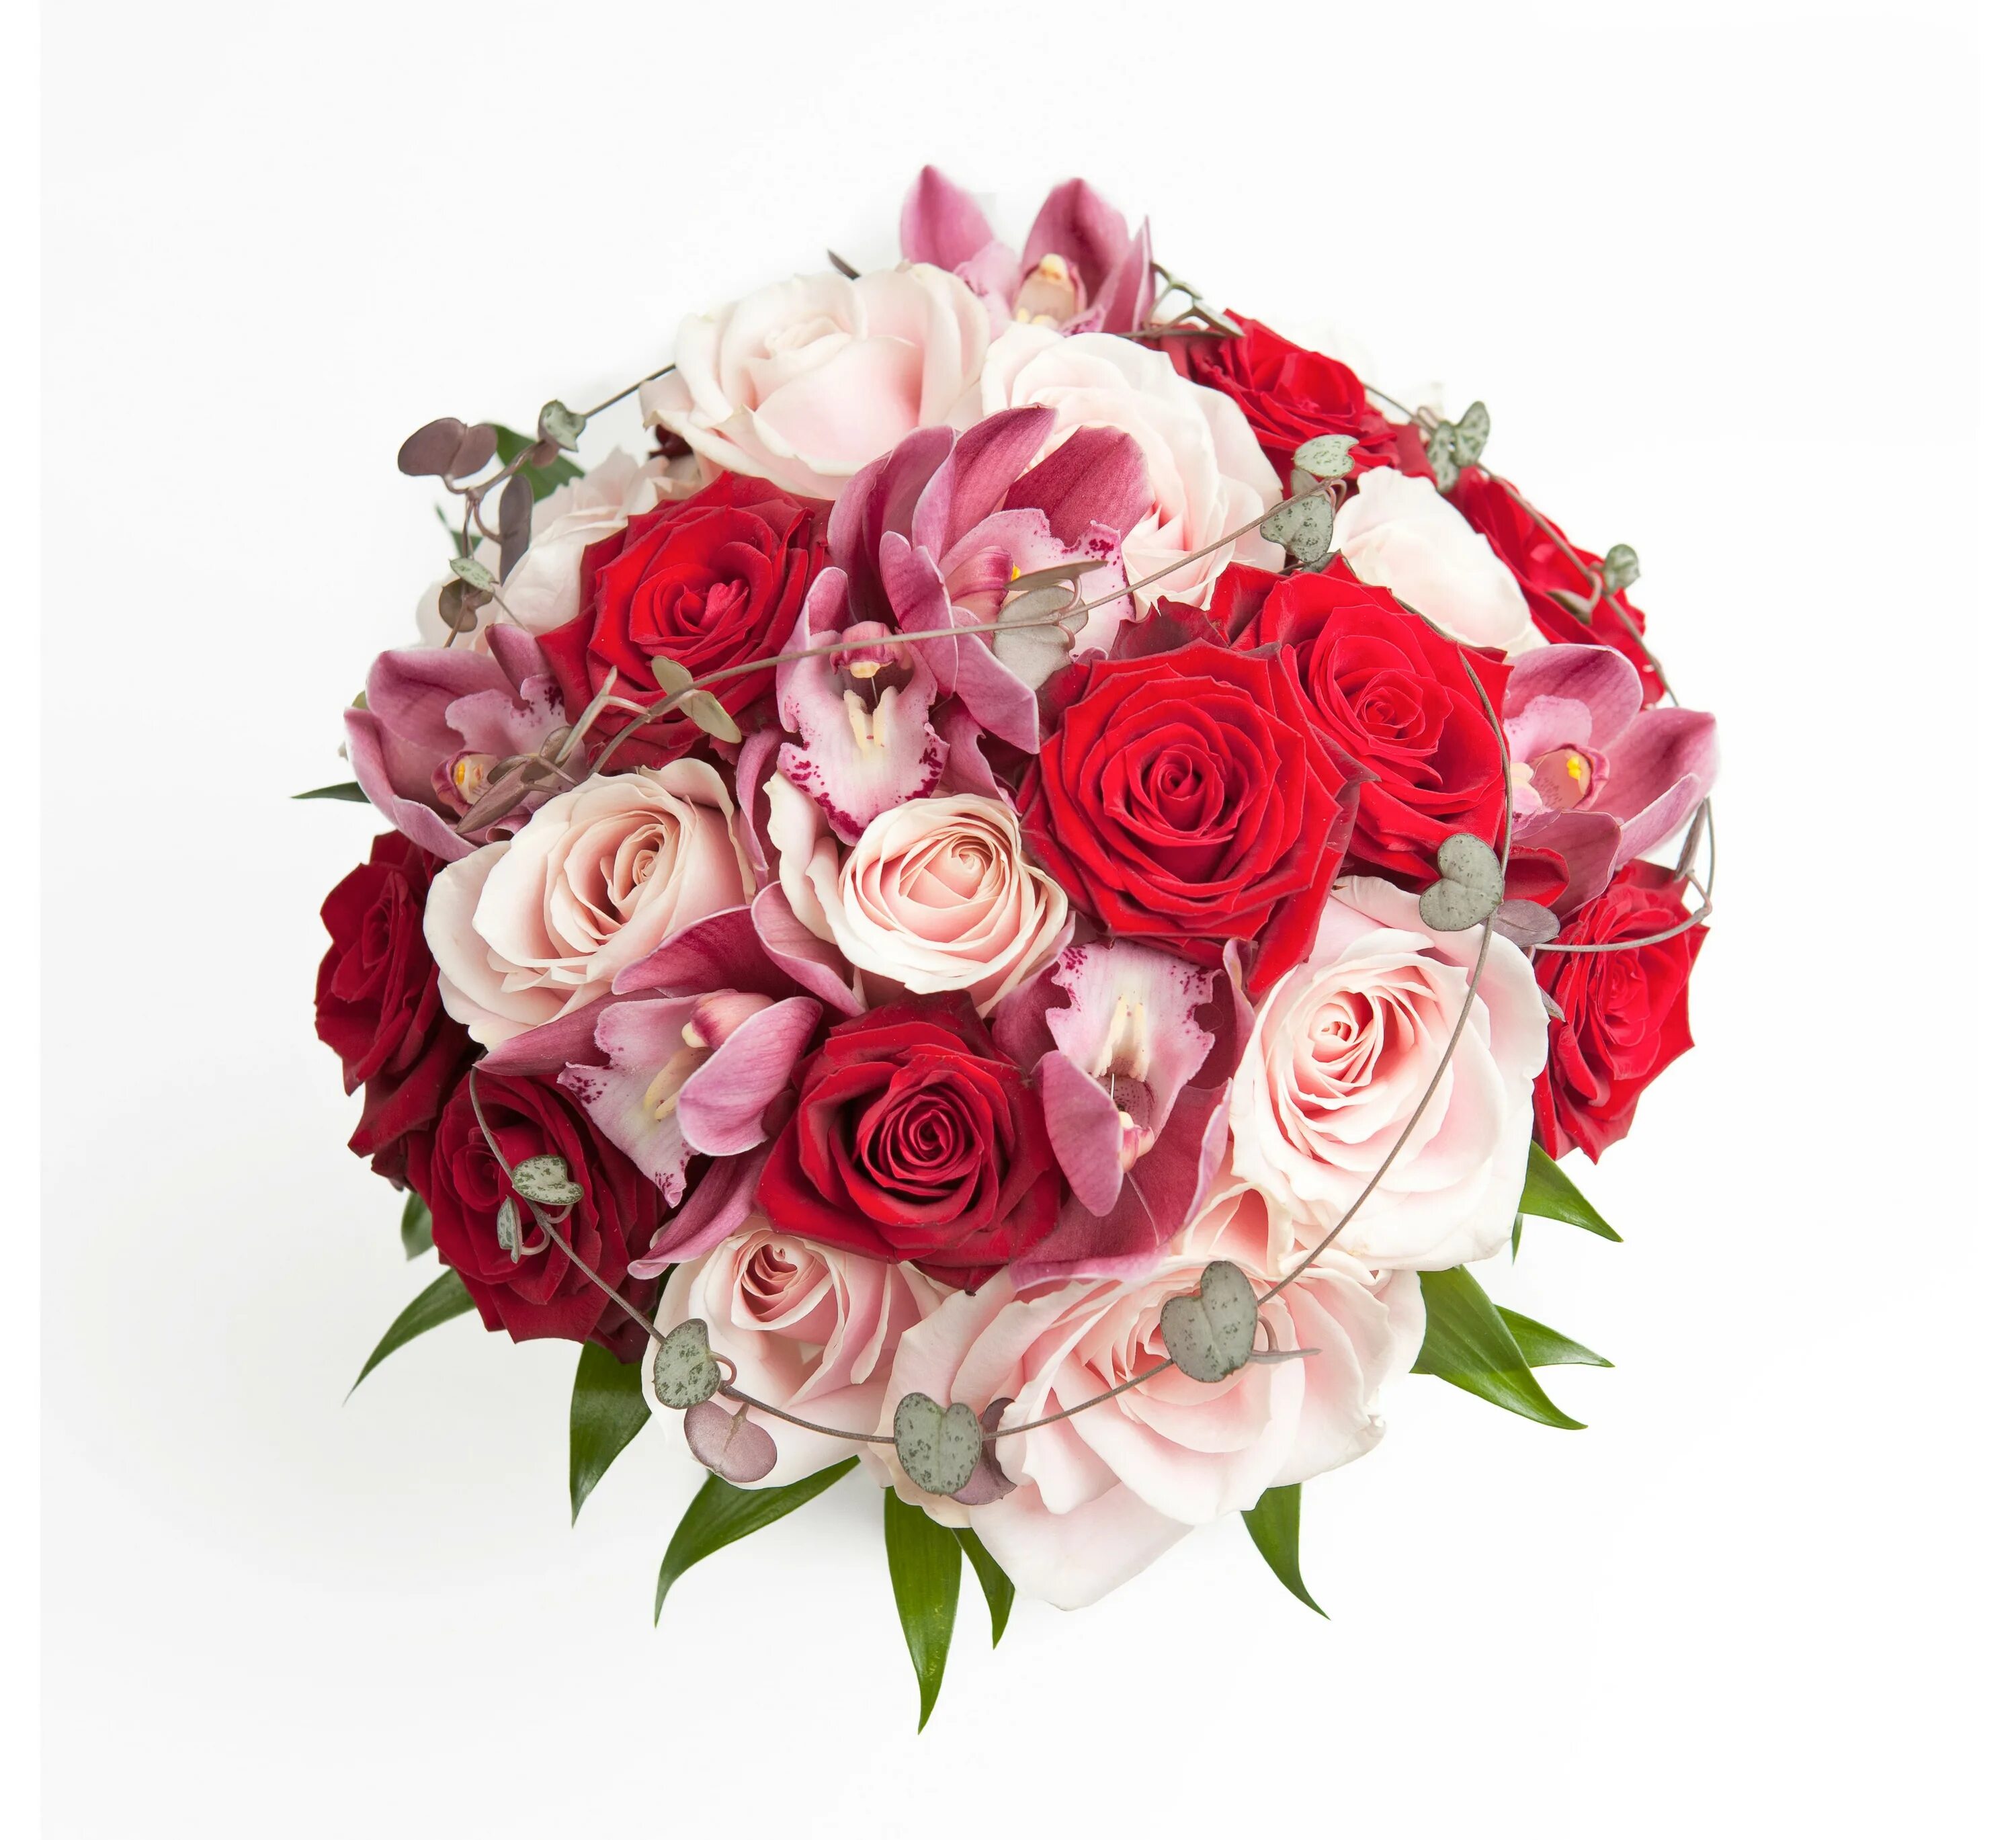 Flower Rose Bouquet букет роз. Круглый букет. Цветы де флер